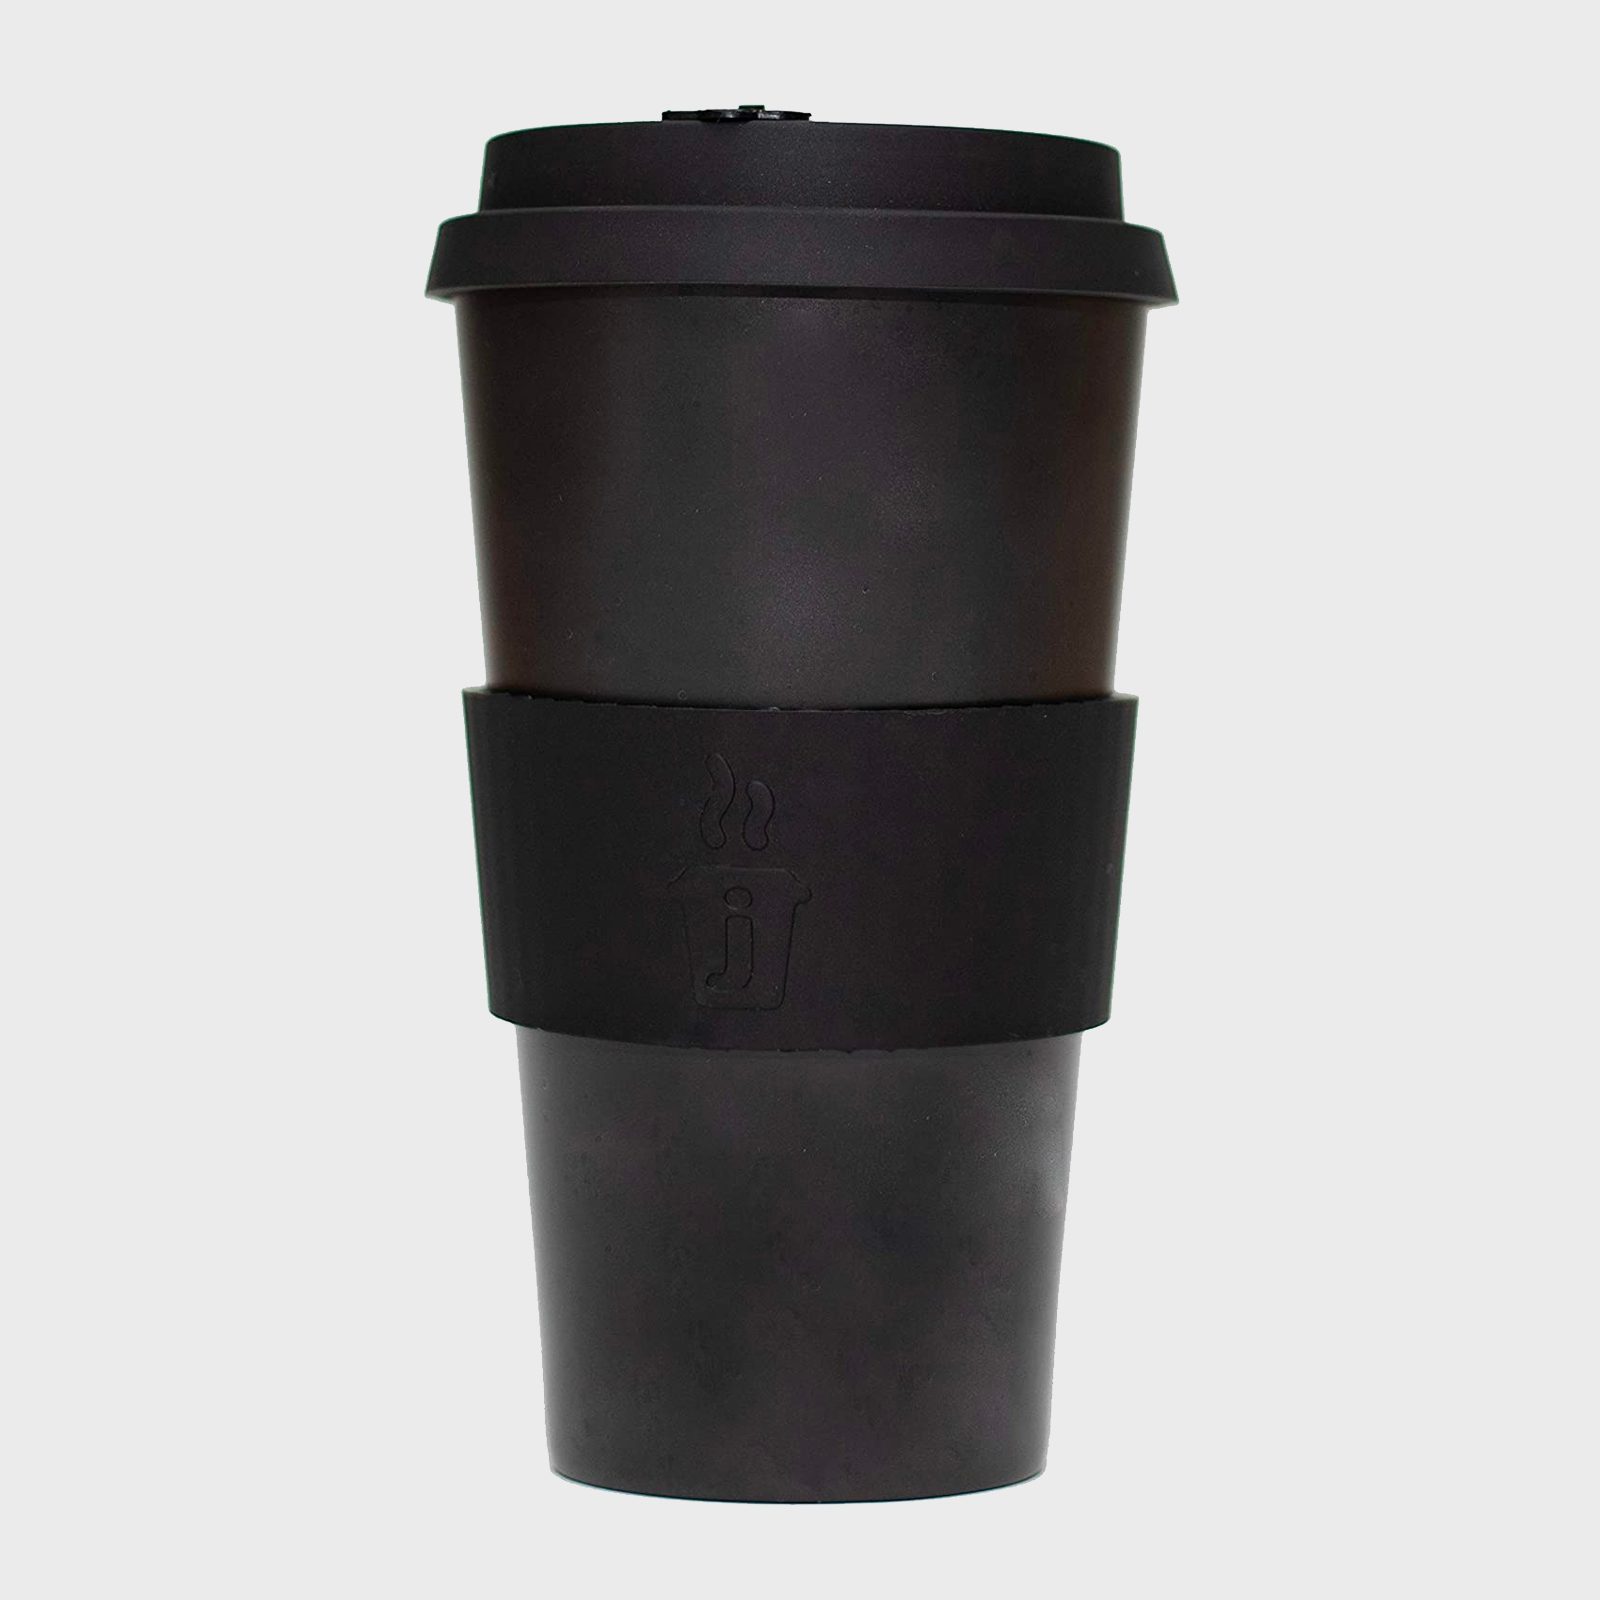 https://www.rd.com/wp-content/uploads/2022/05/RD-15-Best-Reusable-Coffee-Cups-Ecomm-Joe-Cup.jpg?fit=700%2C700